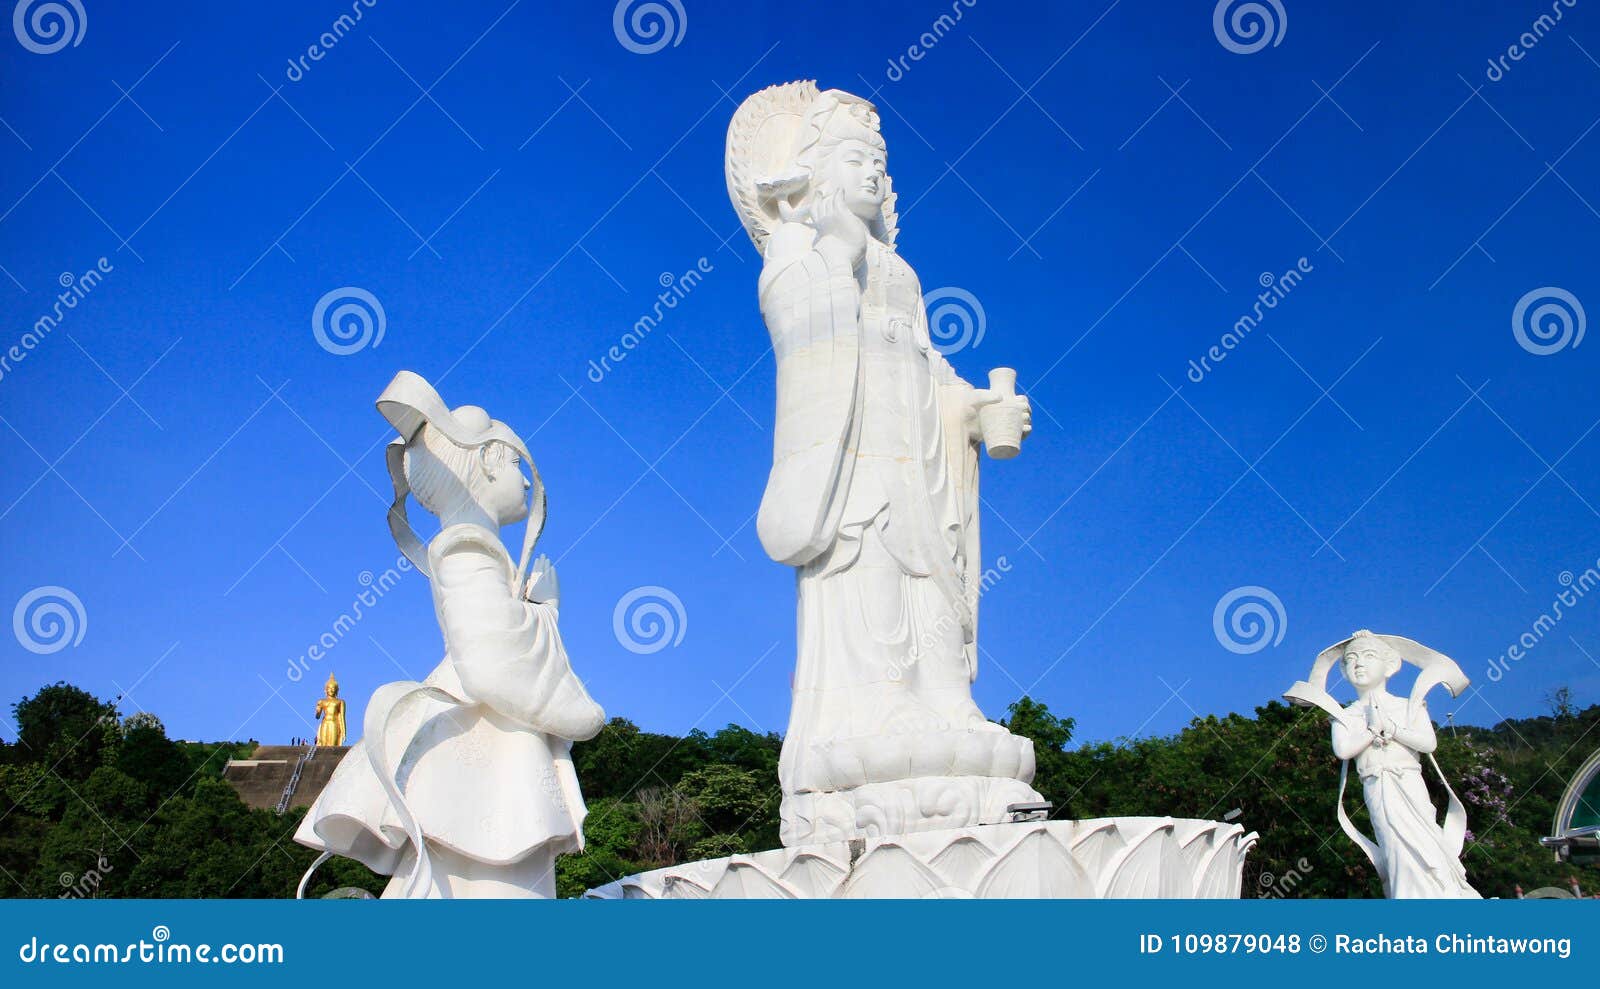 white bodhisattva guan yin statue in hat yai municipal park, hat yai, songkhla, thailand